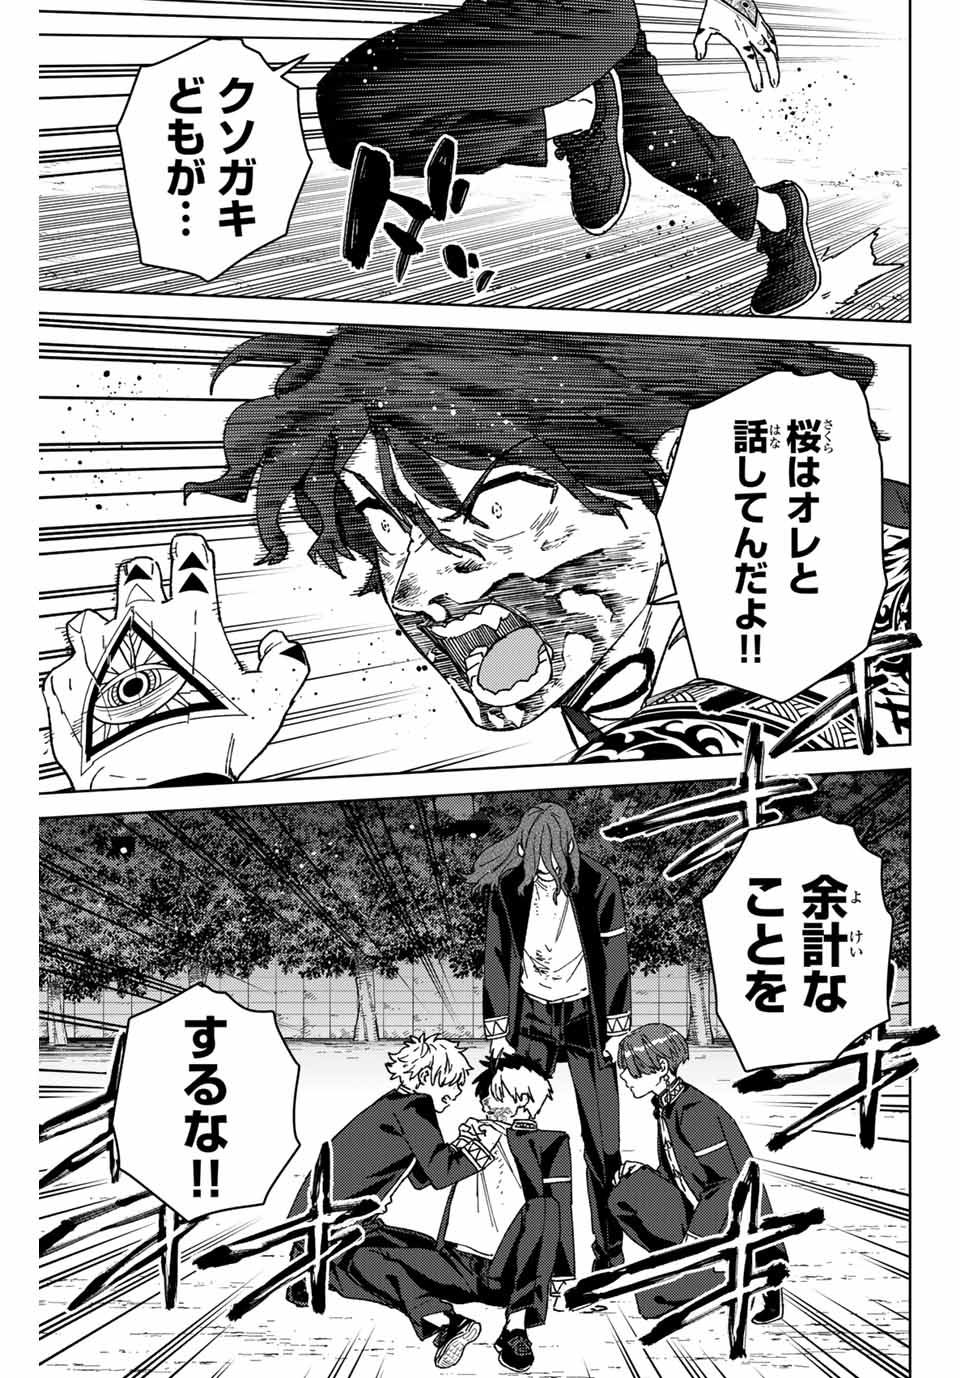 Wind Breaker (NII Satoru) - Chapter 146 - Page 1